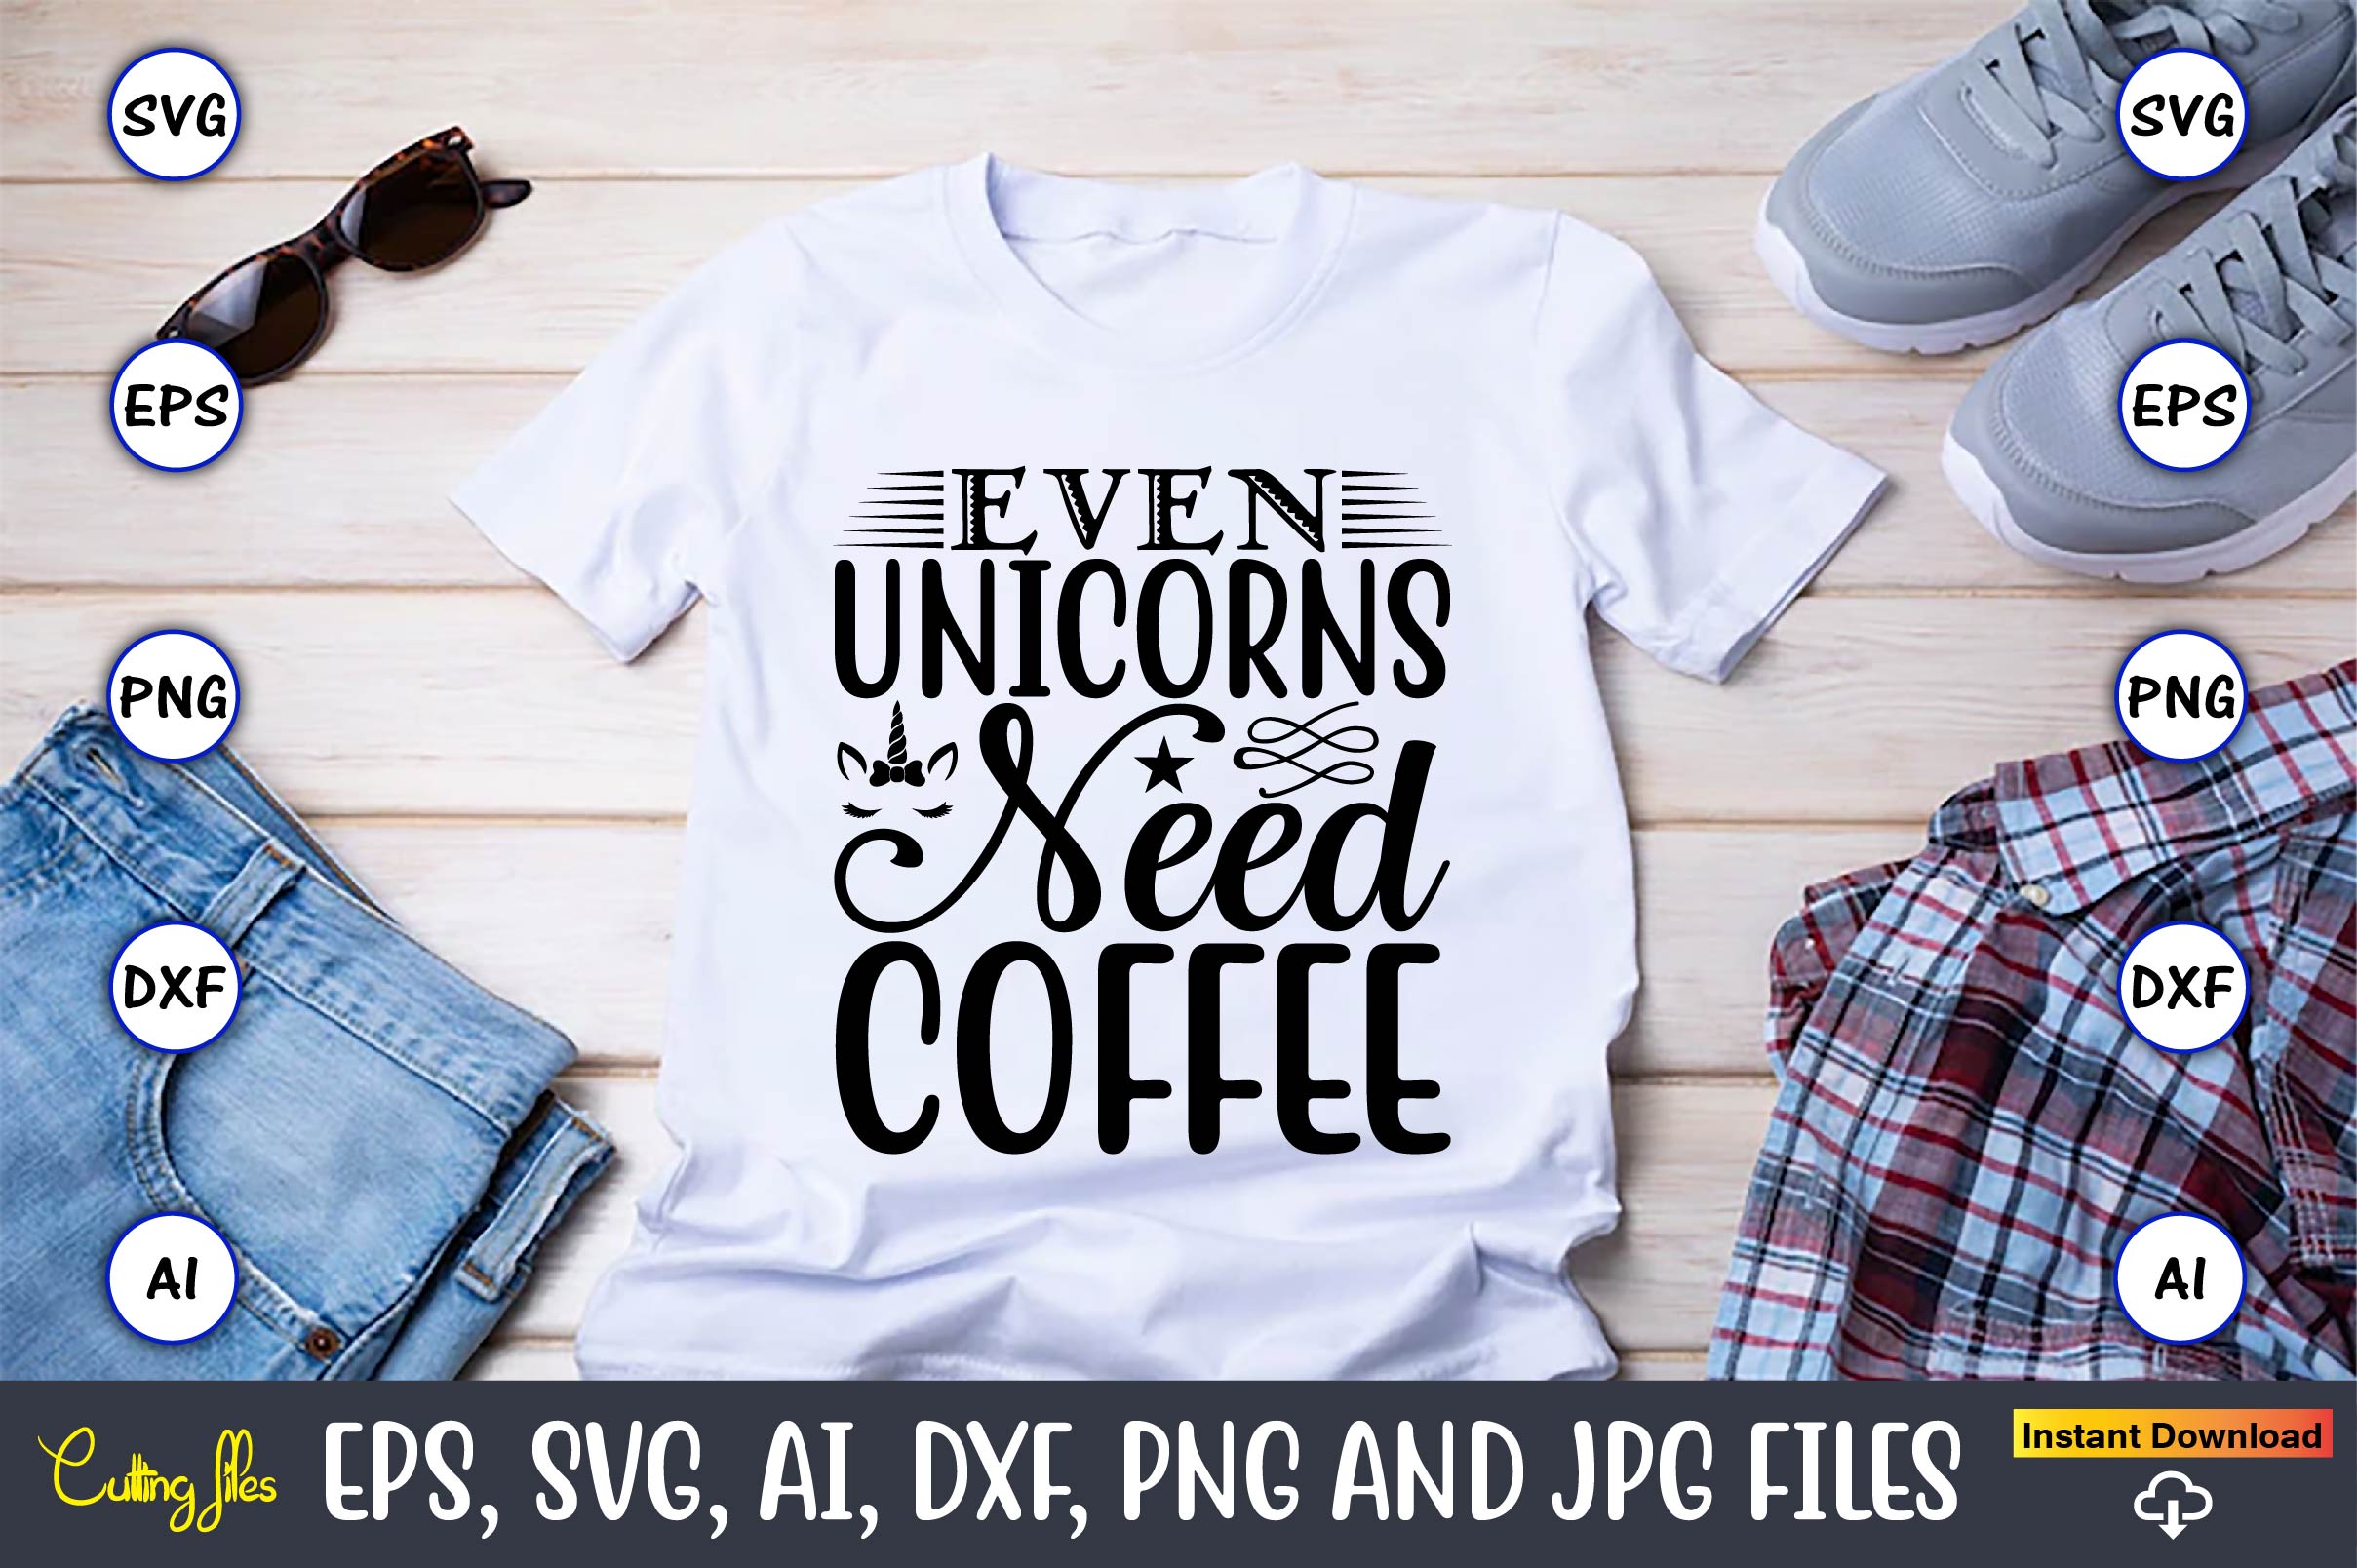 Even unicorns need coffee,unicorn,unicorn t-shirt, unicorn design